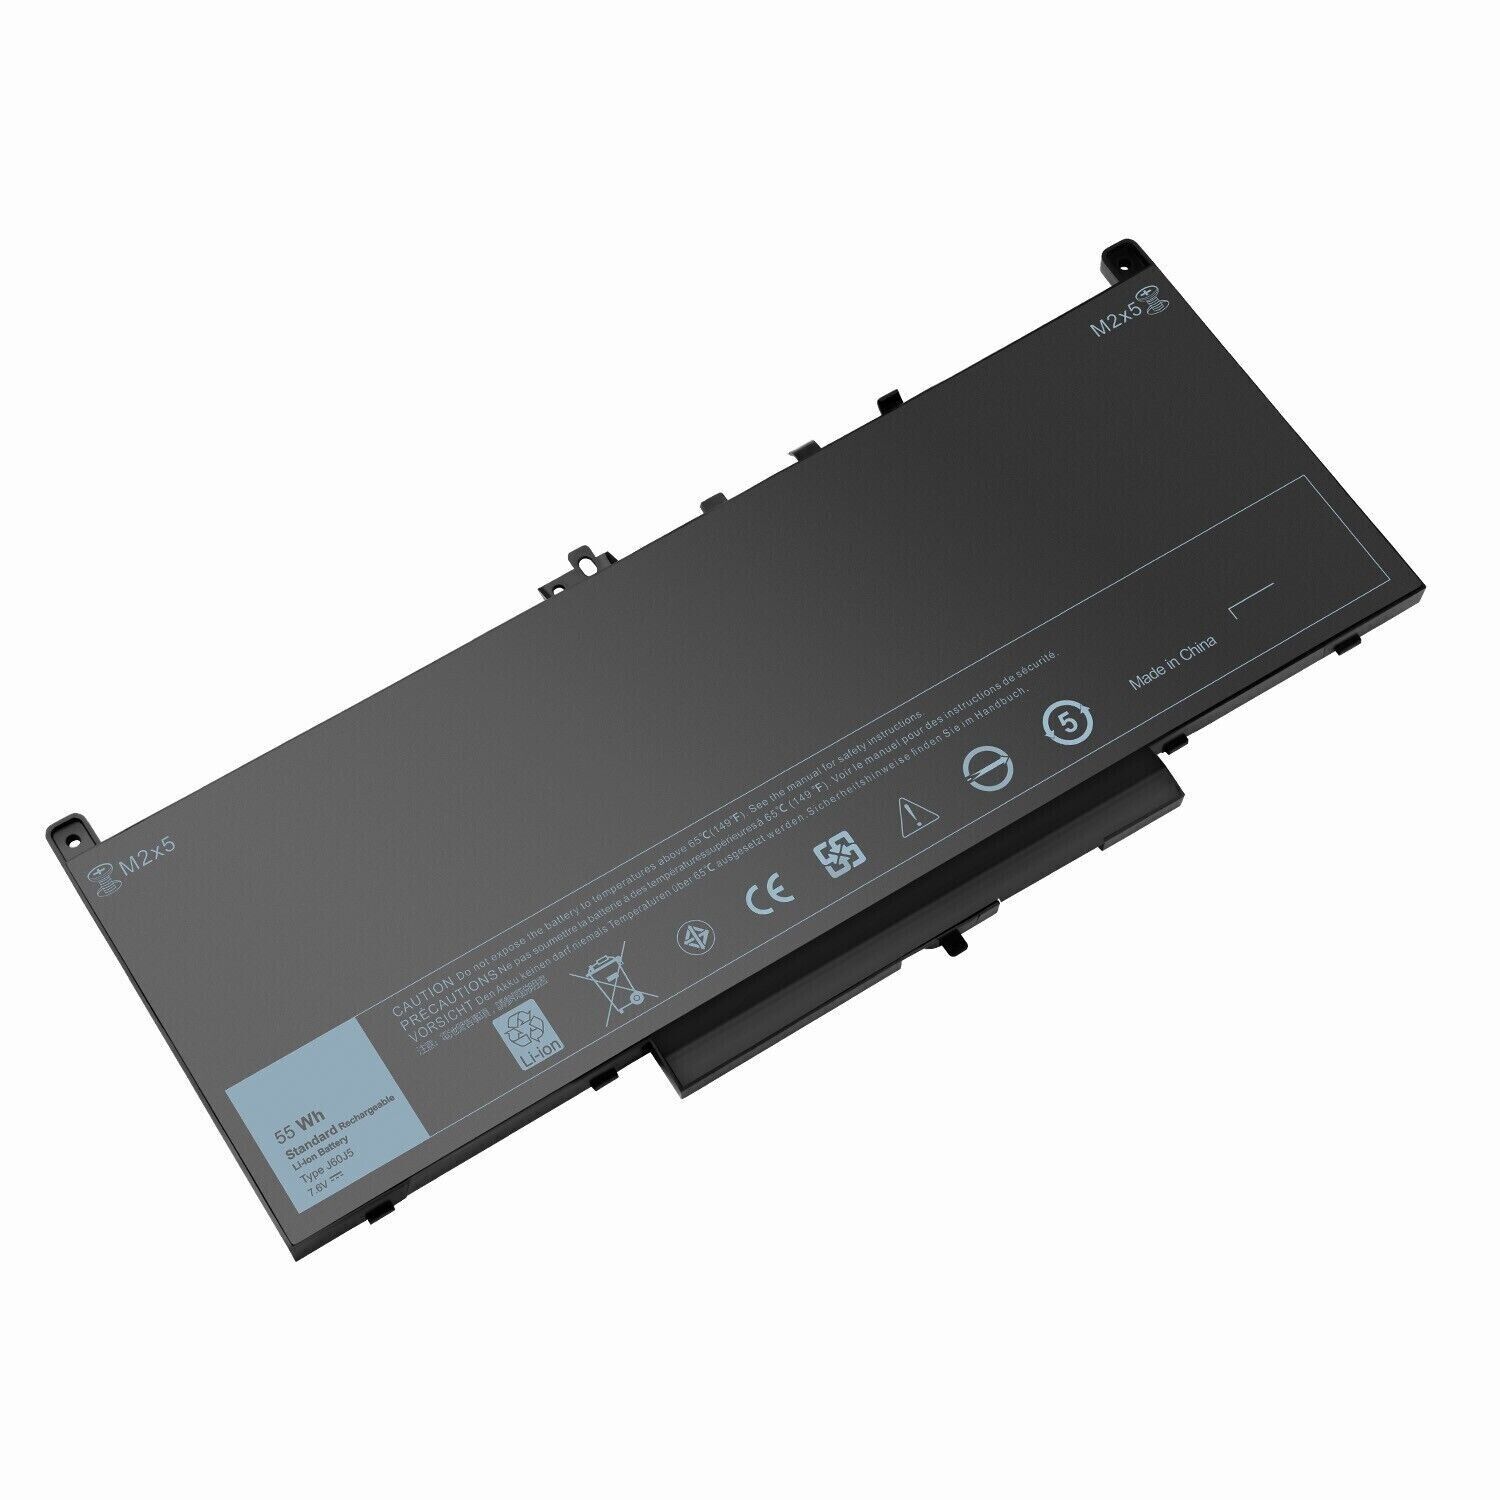 30x Battery For Dell Latitude E7270 E7470 Series Laptop J60J5 R1V85 451-BBSX 451